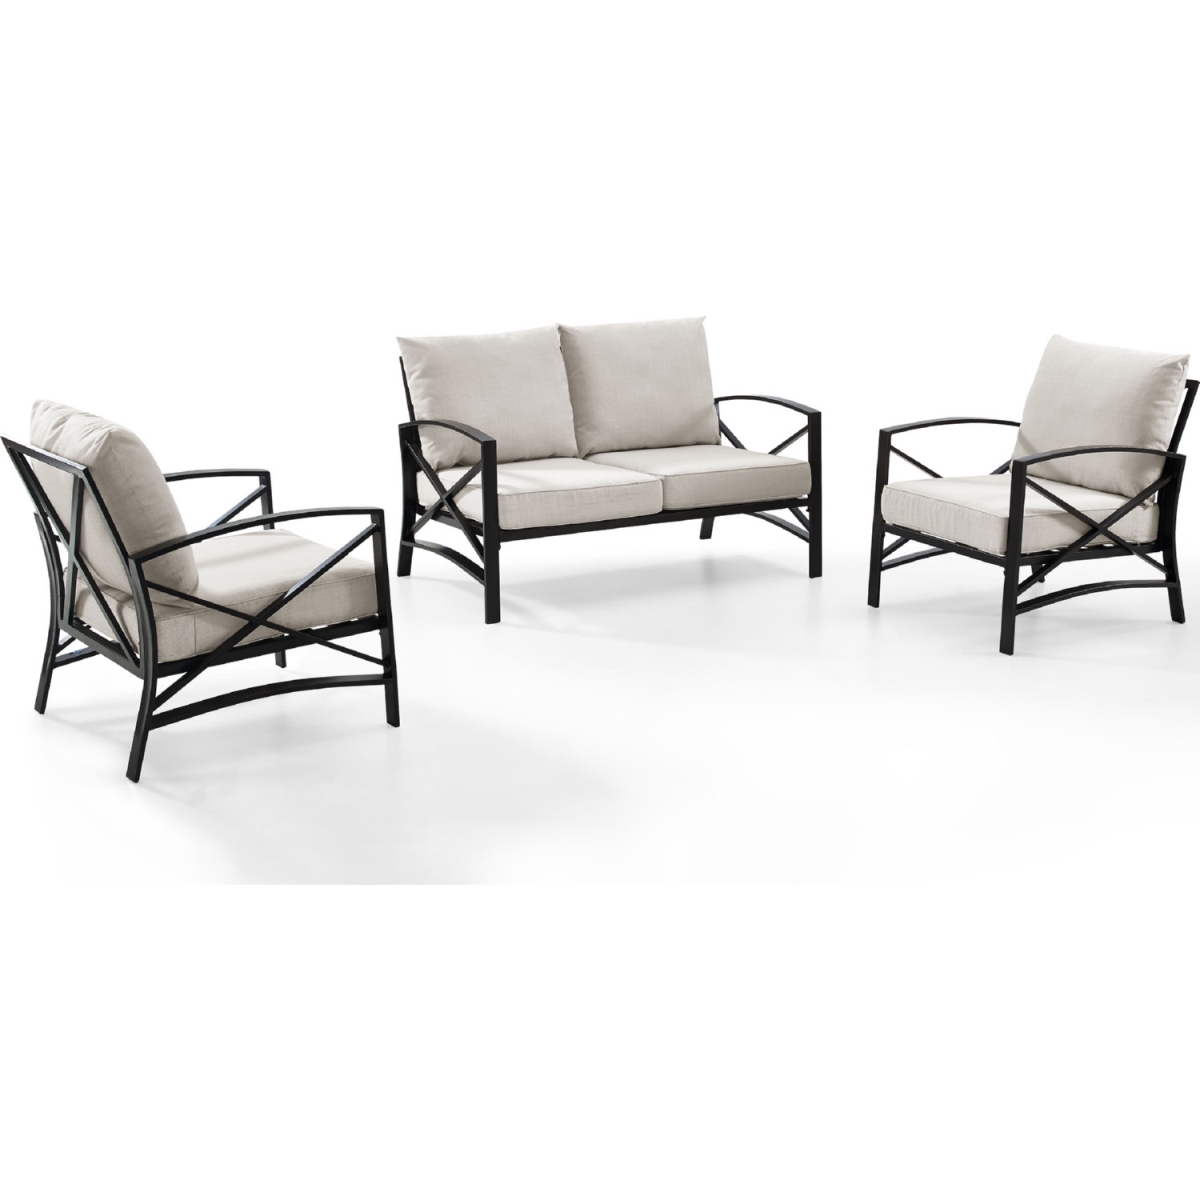 Ko60011bz-ol 3 Piece Kaplan Outdoor Seating Set With Oatmeal Cushion - Loveseat, Two Kaplan Outdoor Chairs